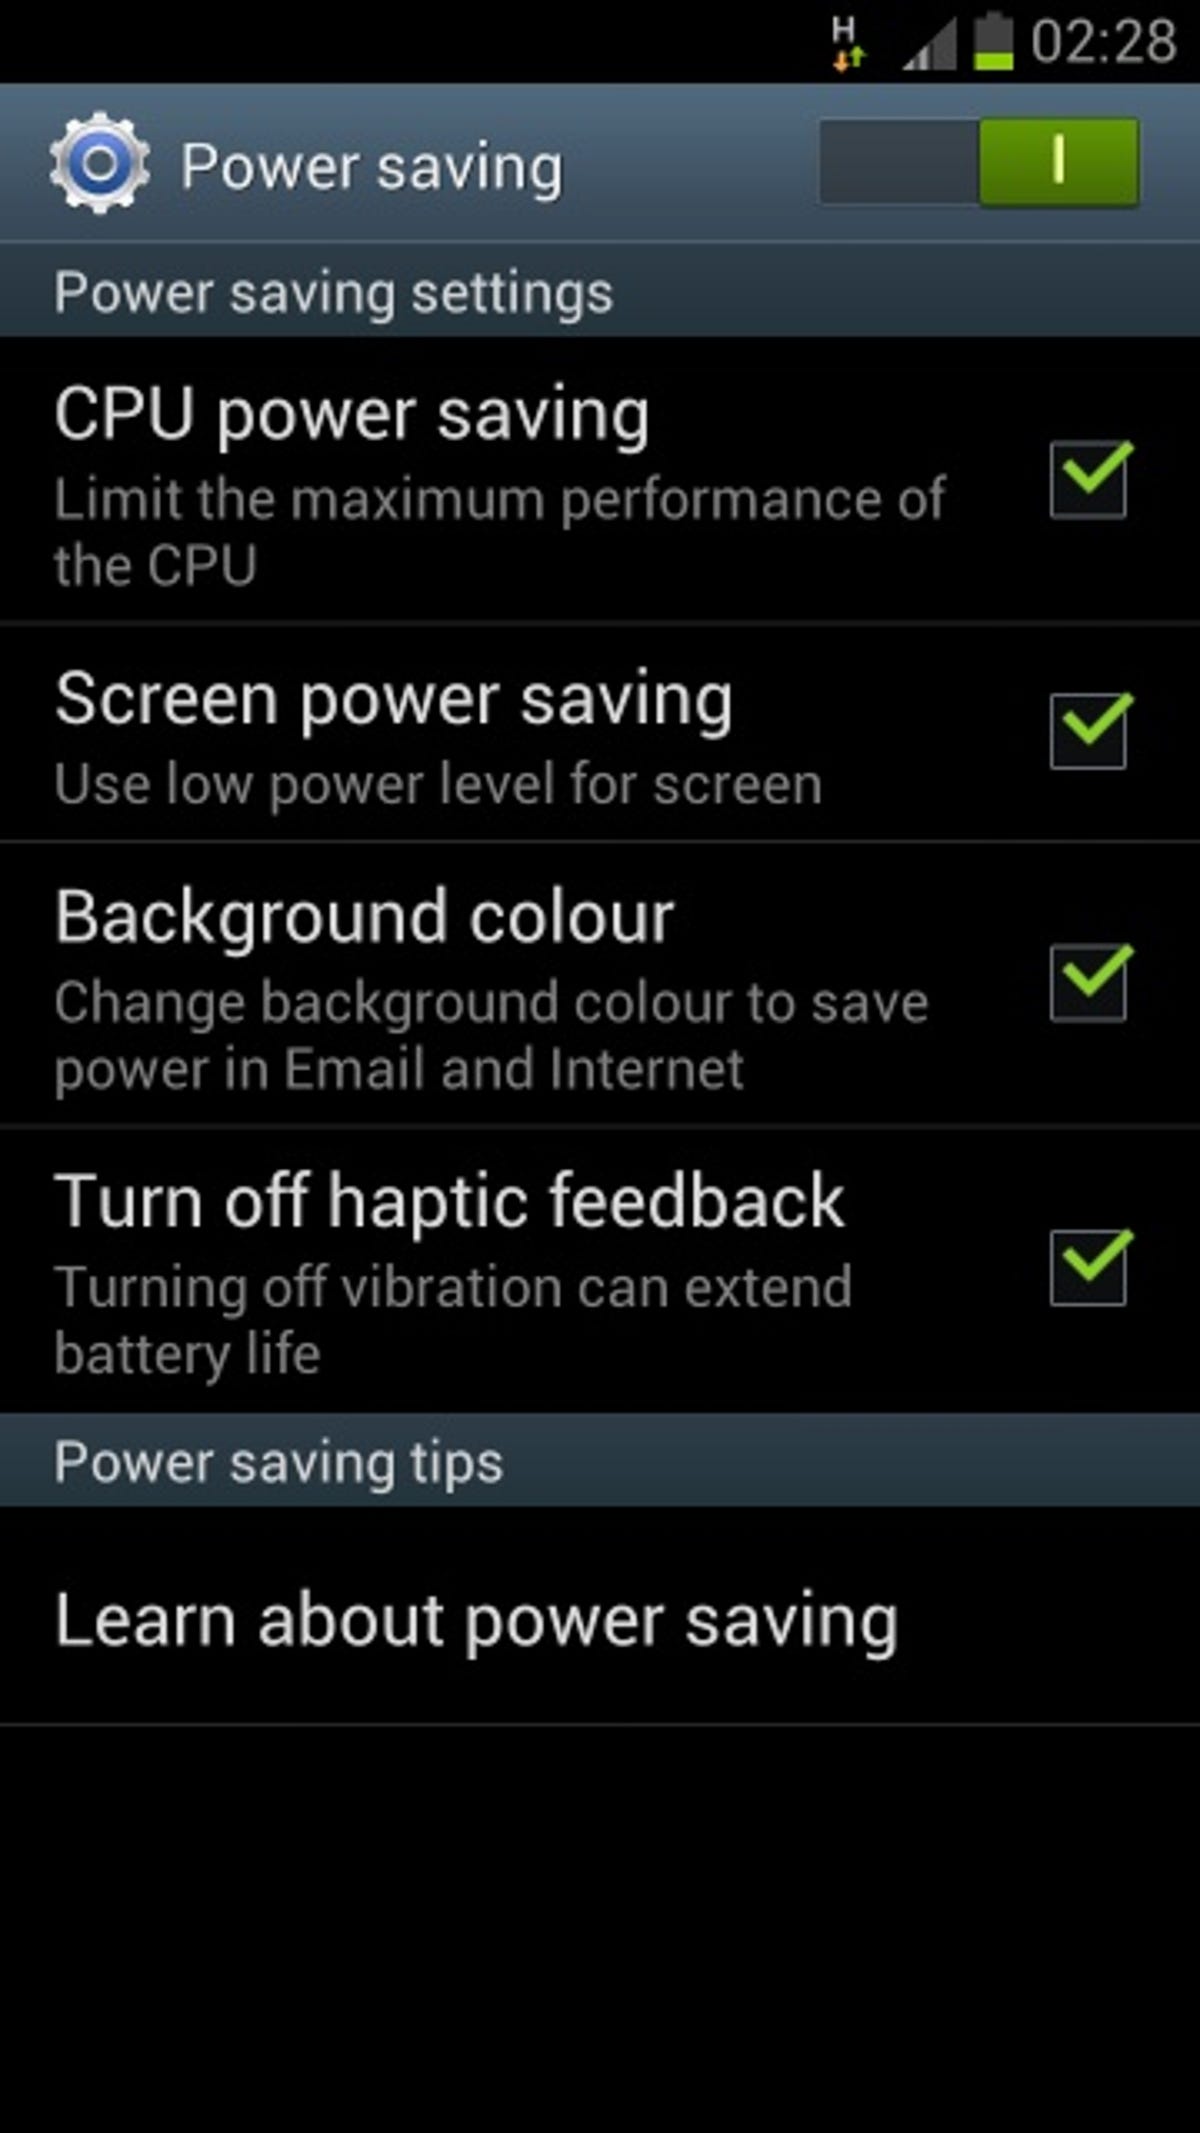 Samsung Galaxy S3 battery life: power saving